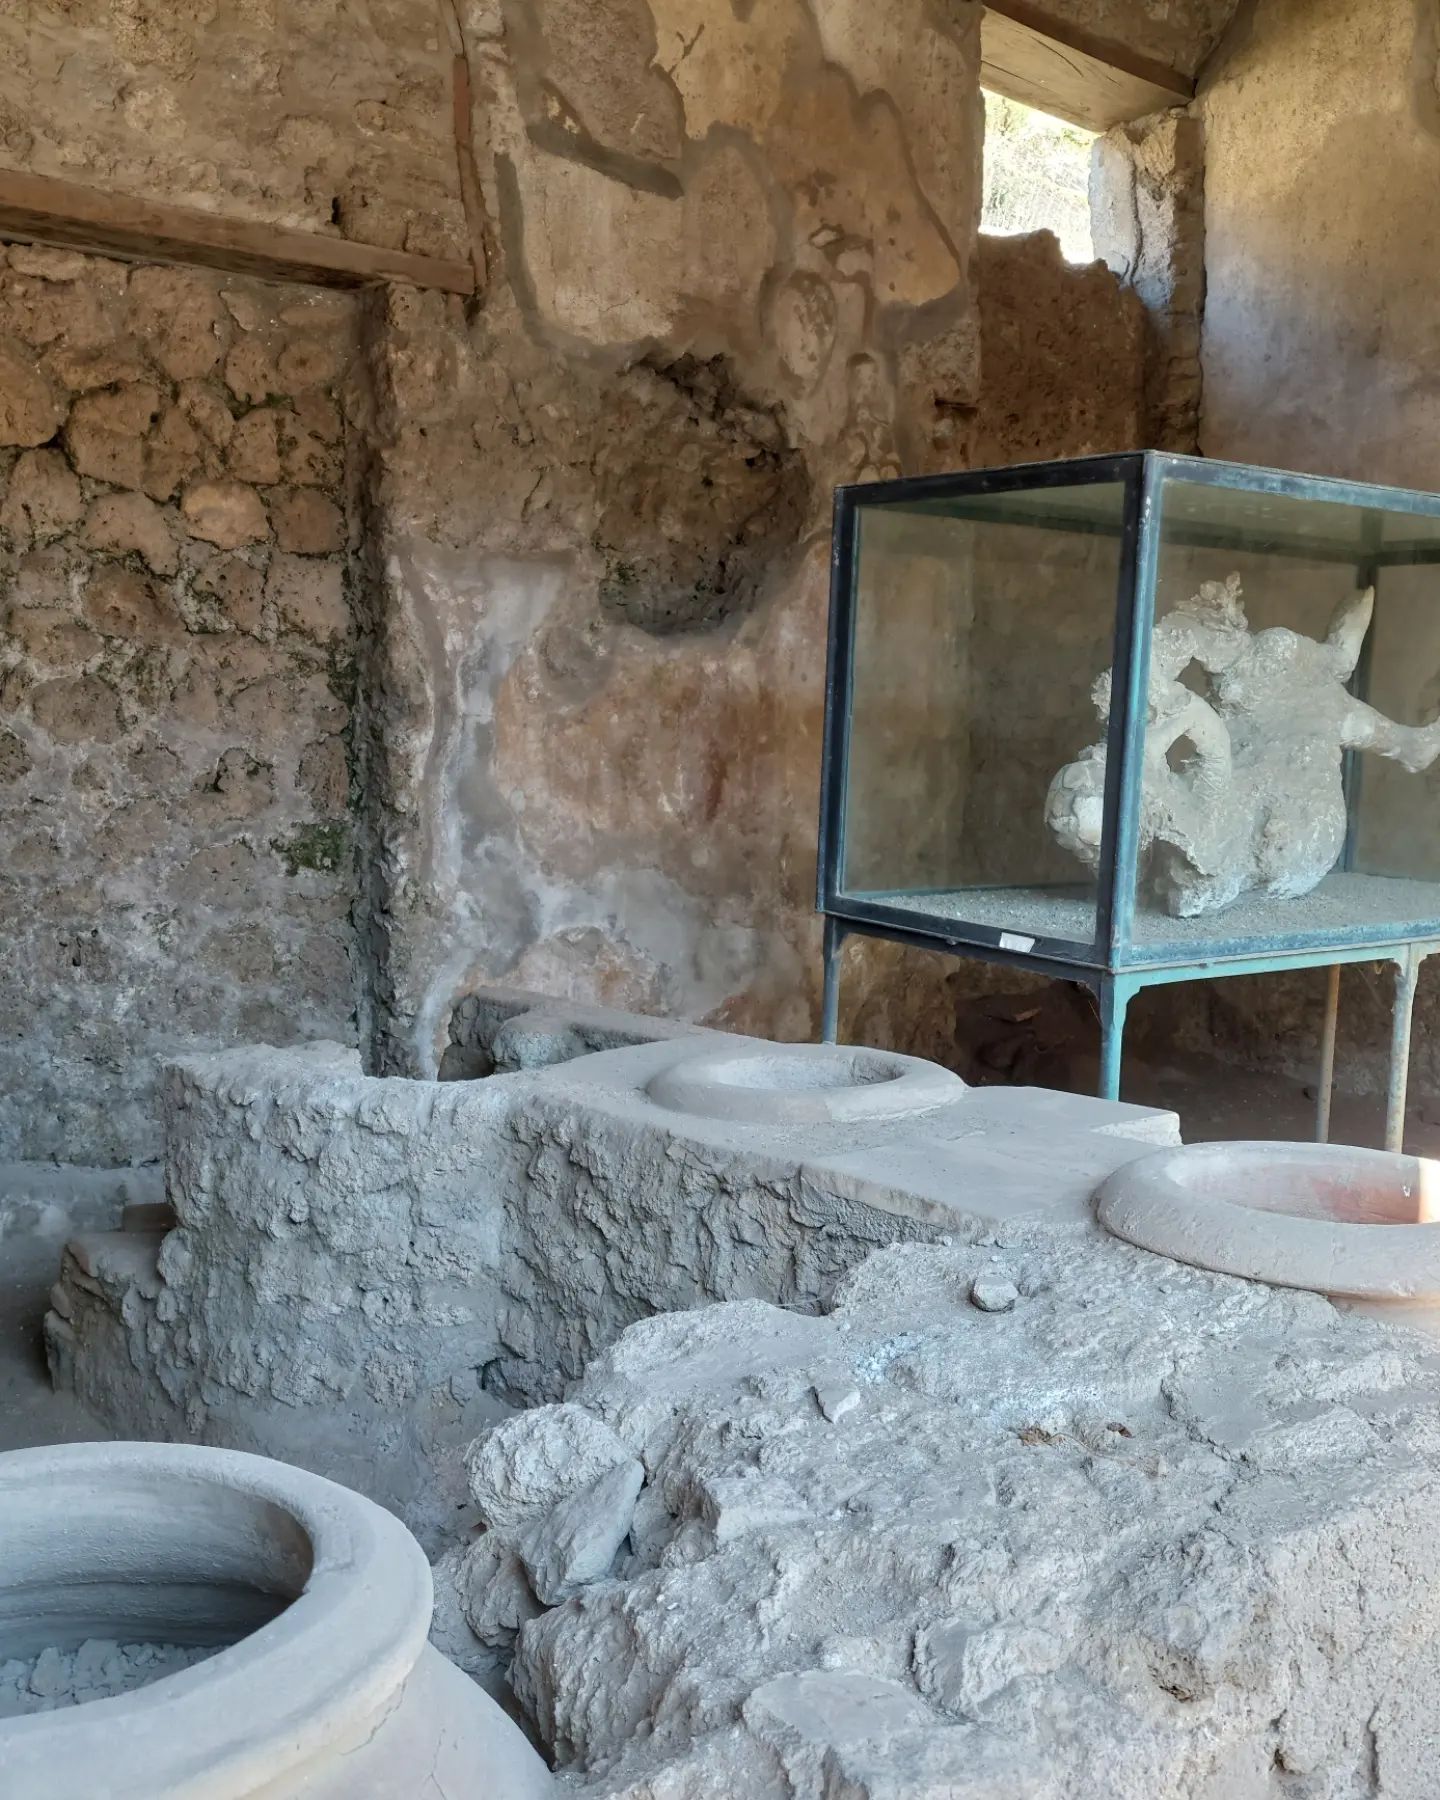 One of the most amazing places I've ever been to. 
.
.
. #pompeii #italy #vesuvio #vesuvius #history #city #photooftheday